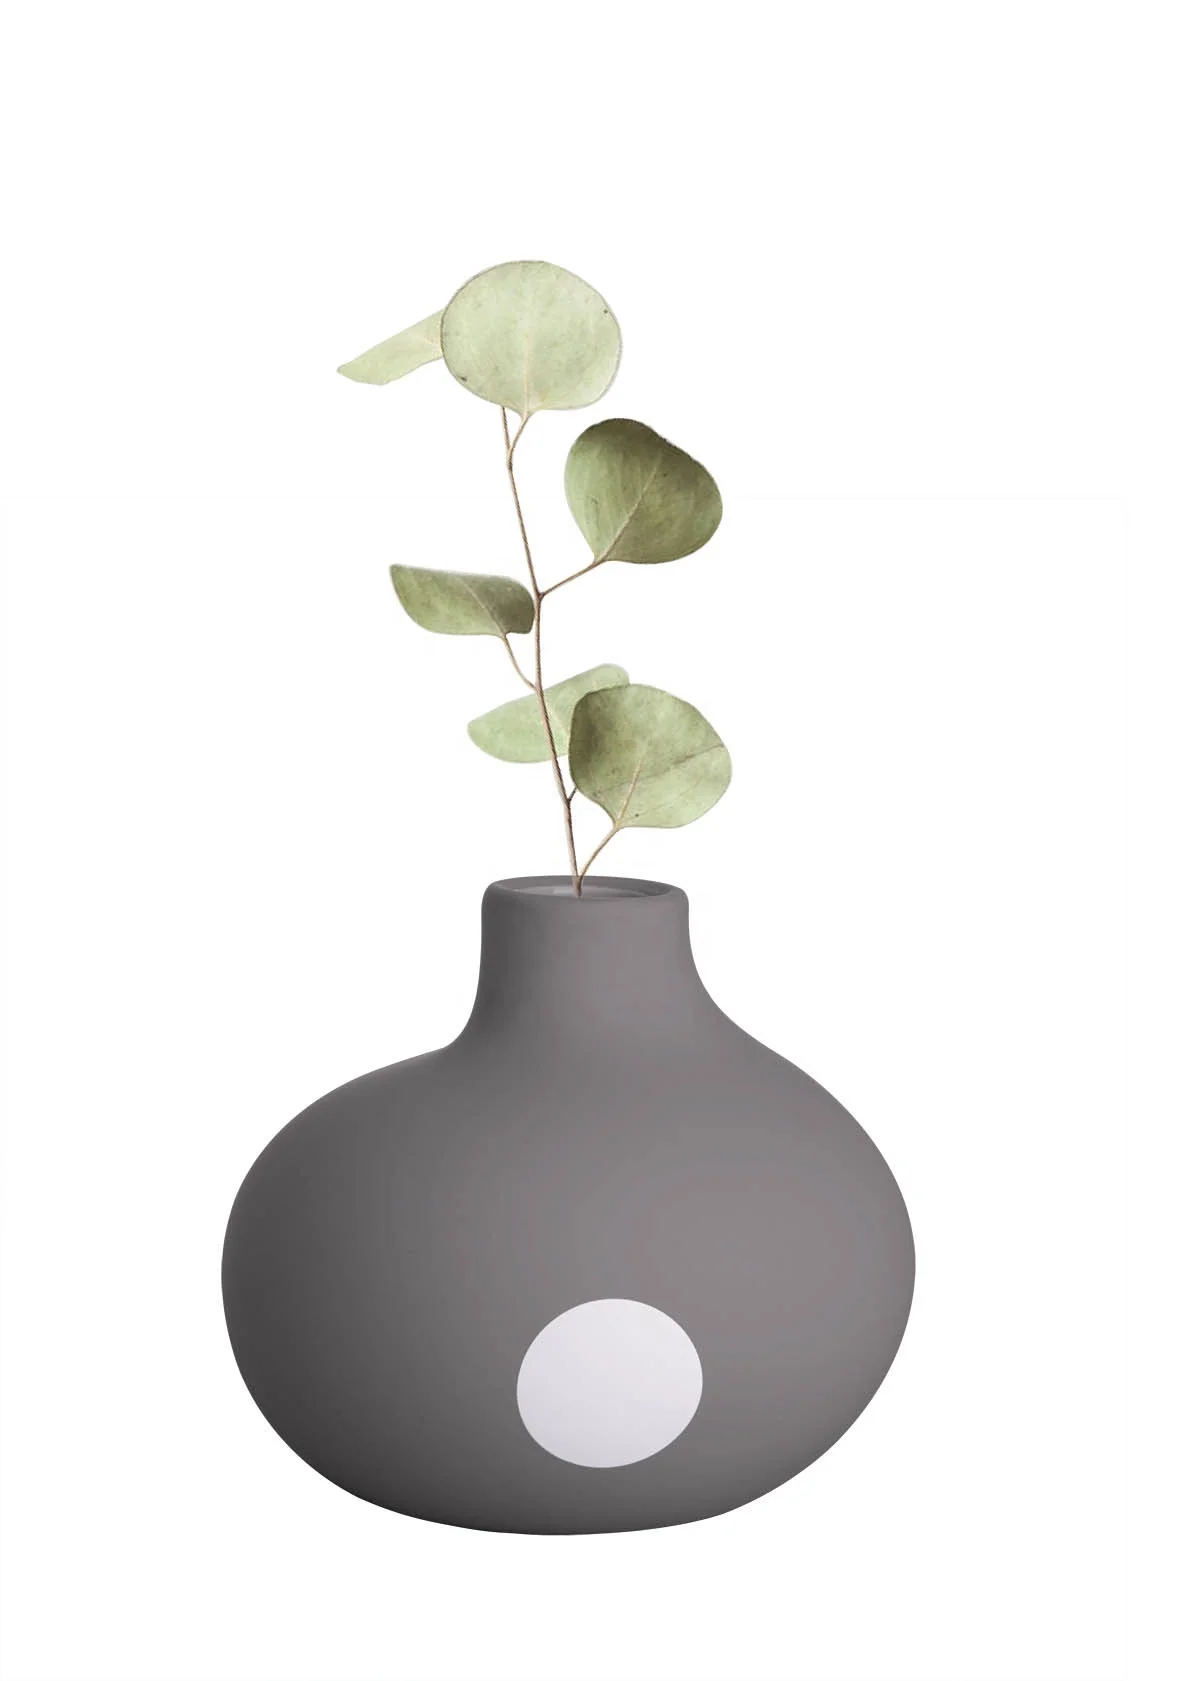 Nordic simple  Decoration Retro White Clay Pottery Flower Vase Minimalistic Small Ceramic Vase for  Home Decor